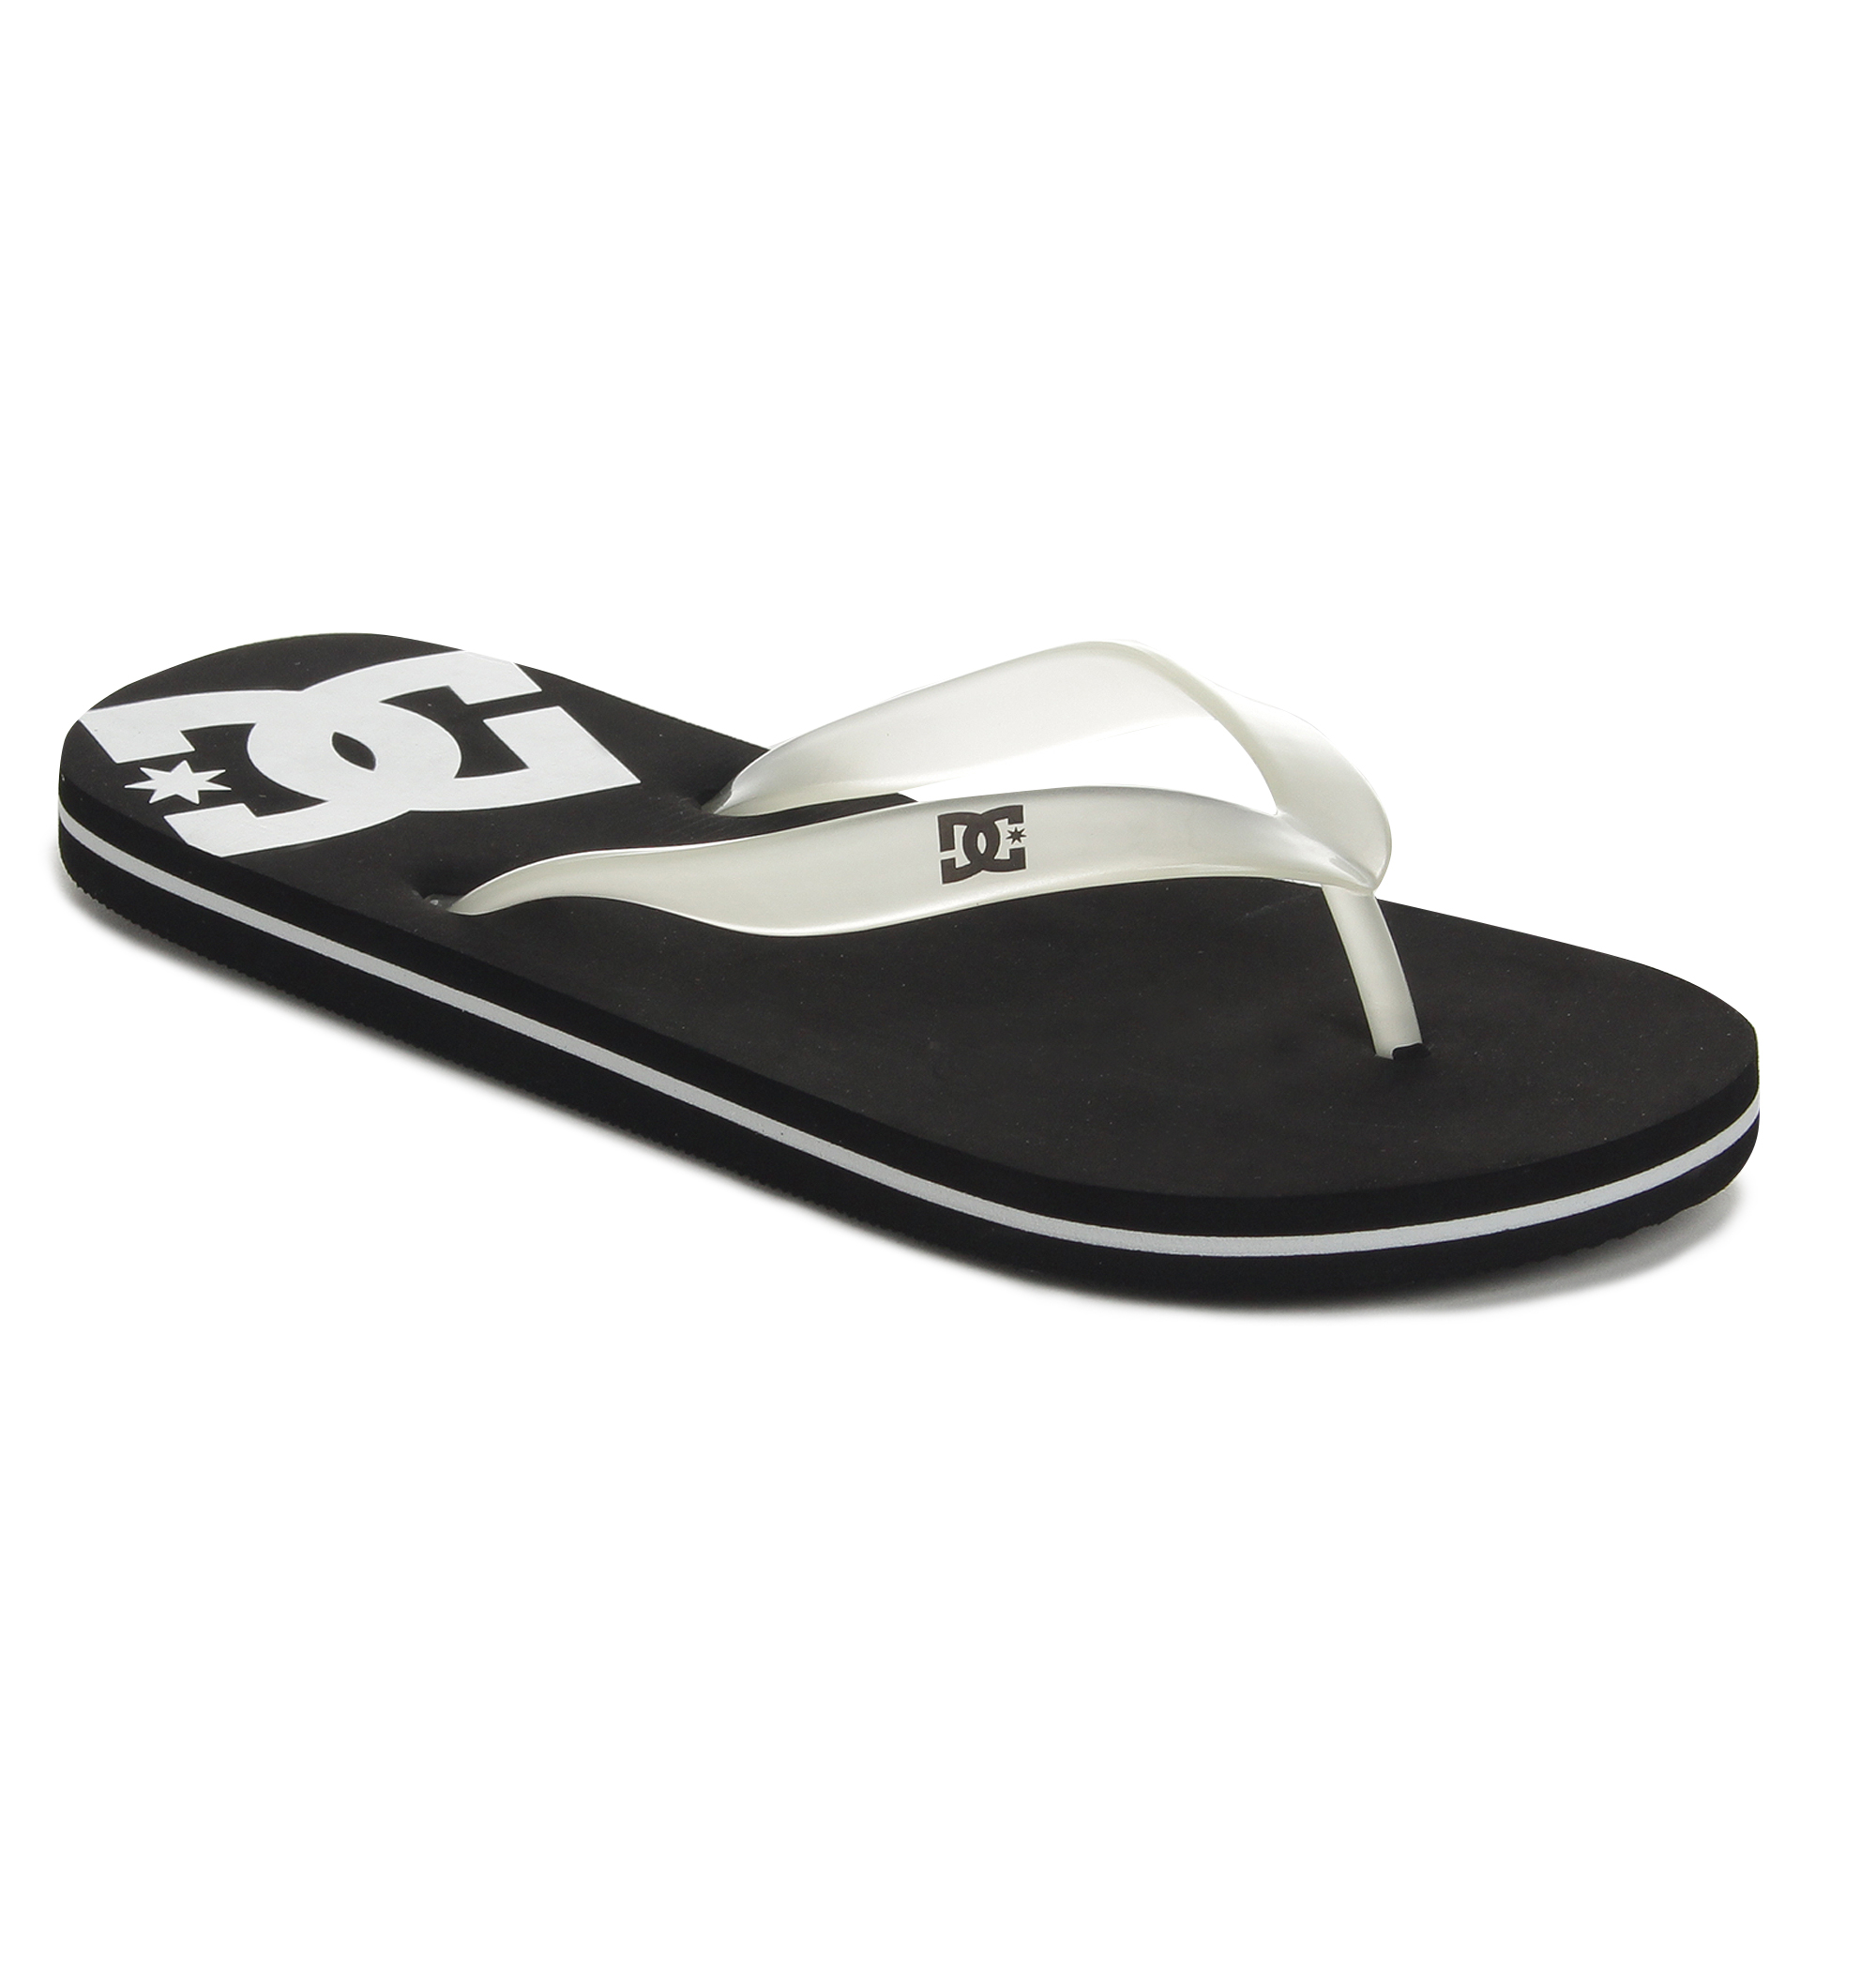 ＜DC Shoe＞ SPRAY GITD 大きく配したブランドロゴが存在感溢れるビーチサンダル